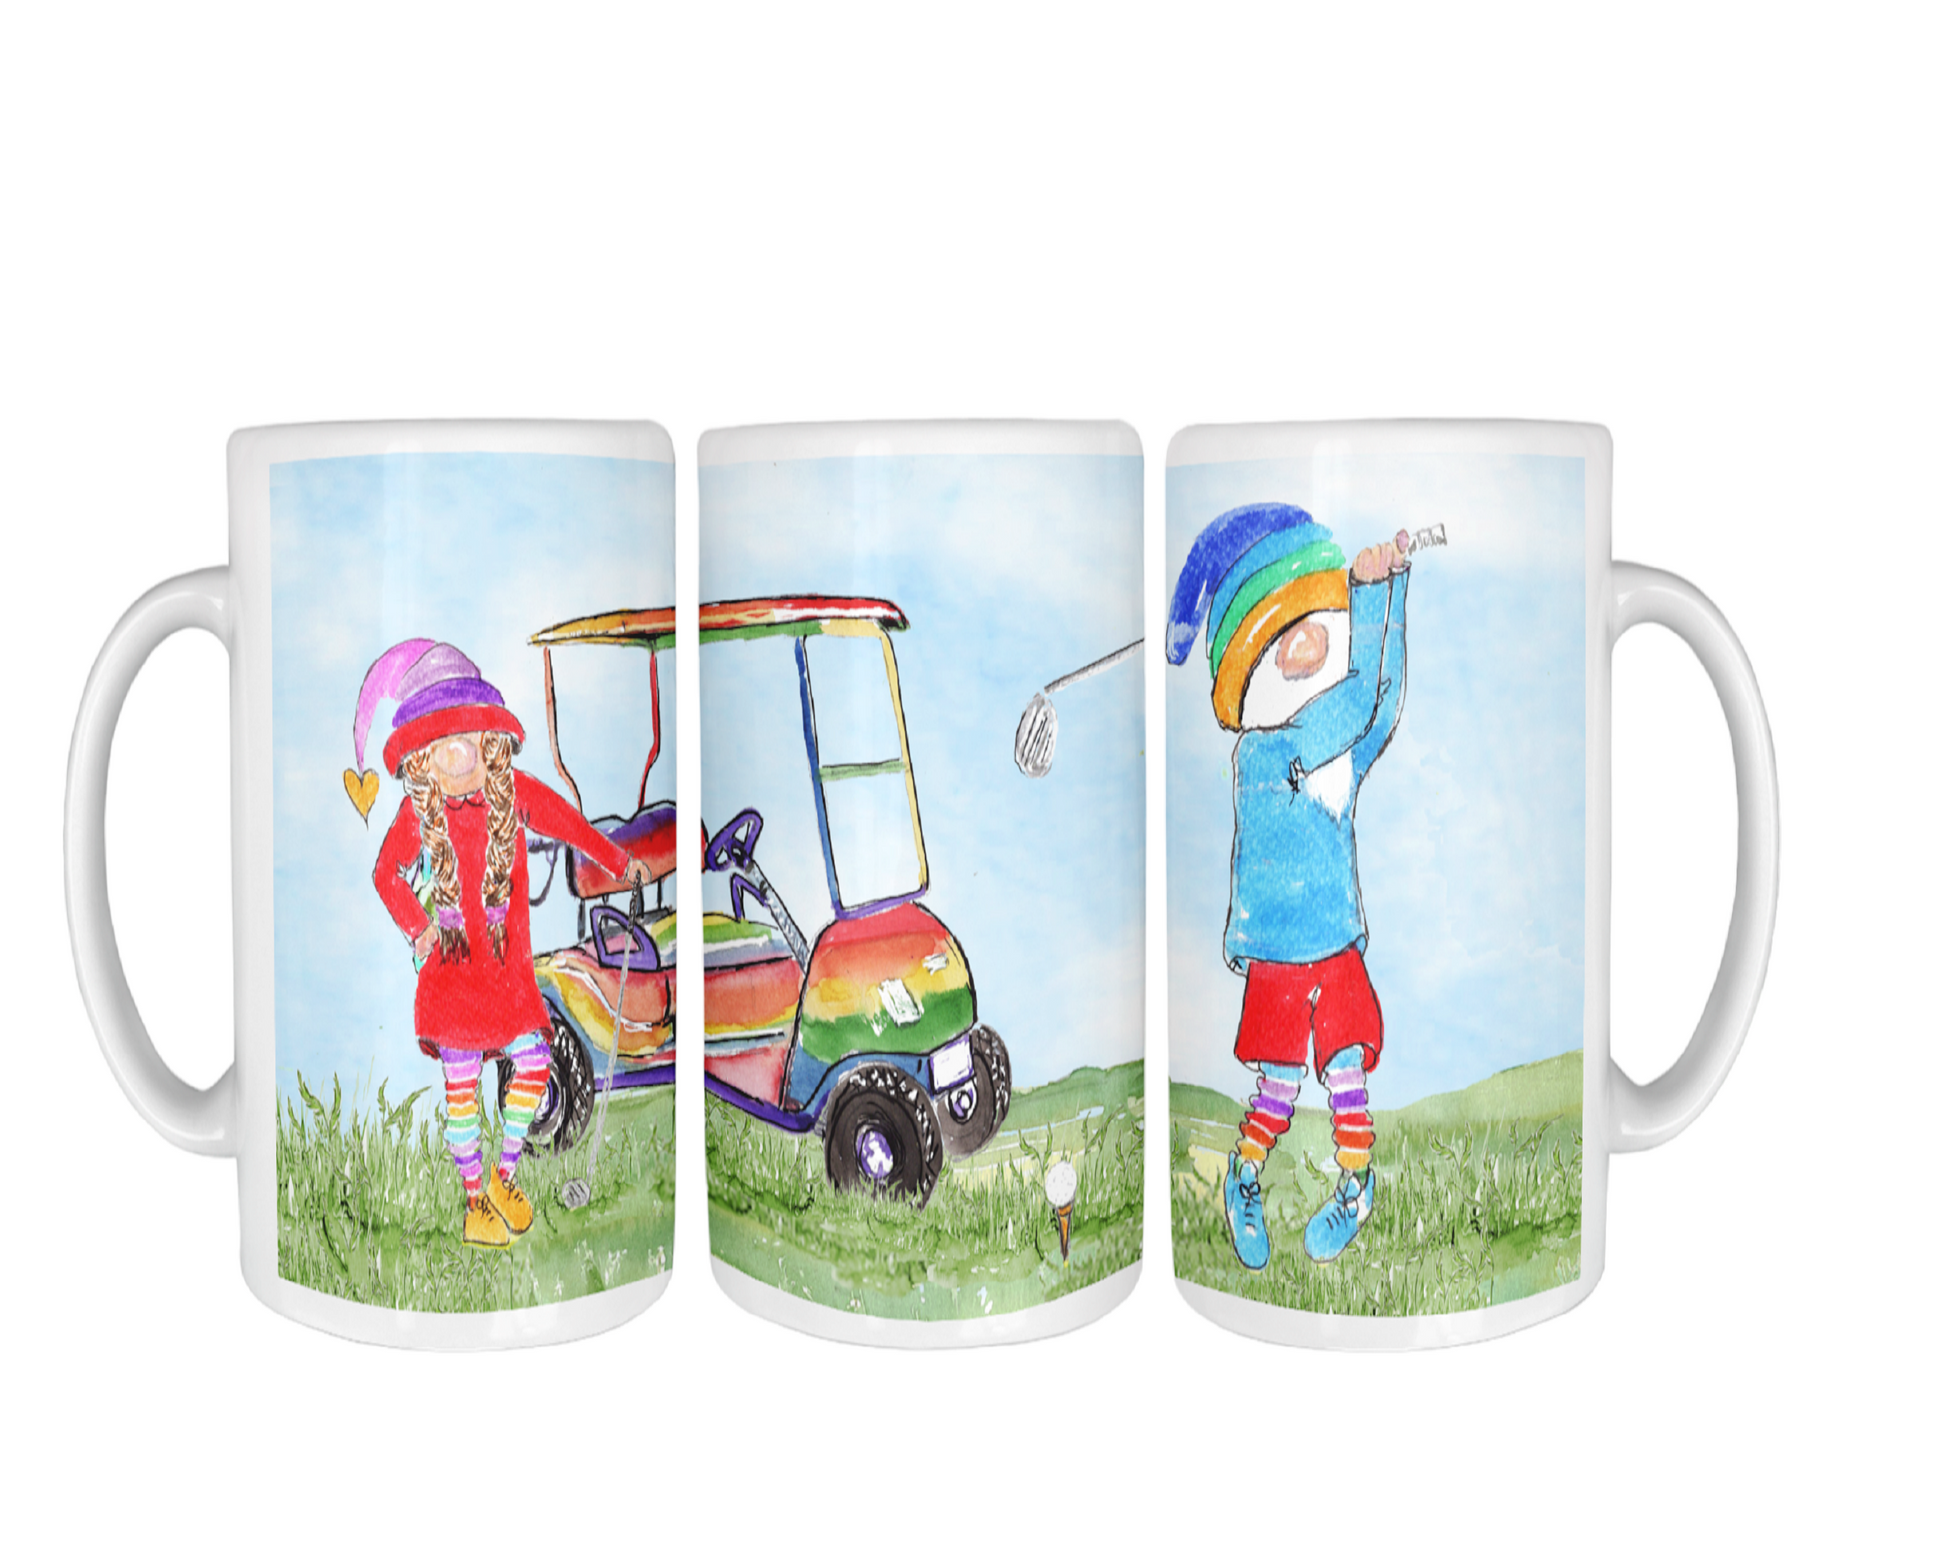  Colourful Gonk Golfers Coffee Mug by Free Spirit Accessories sold by Free Spirit Accessories